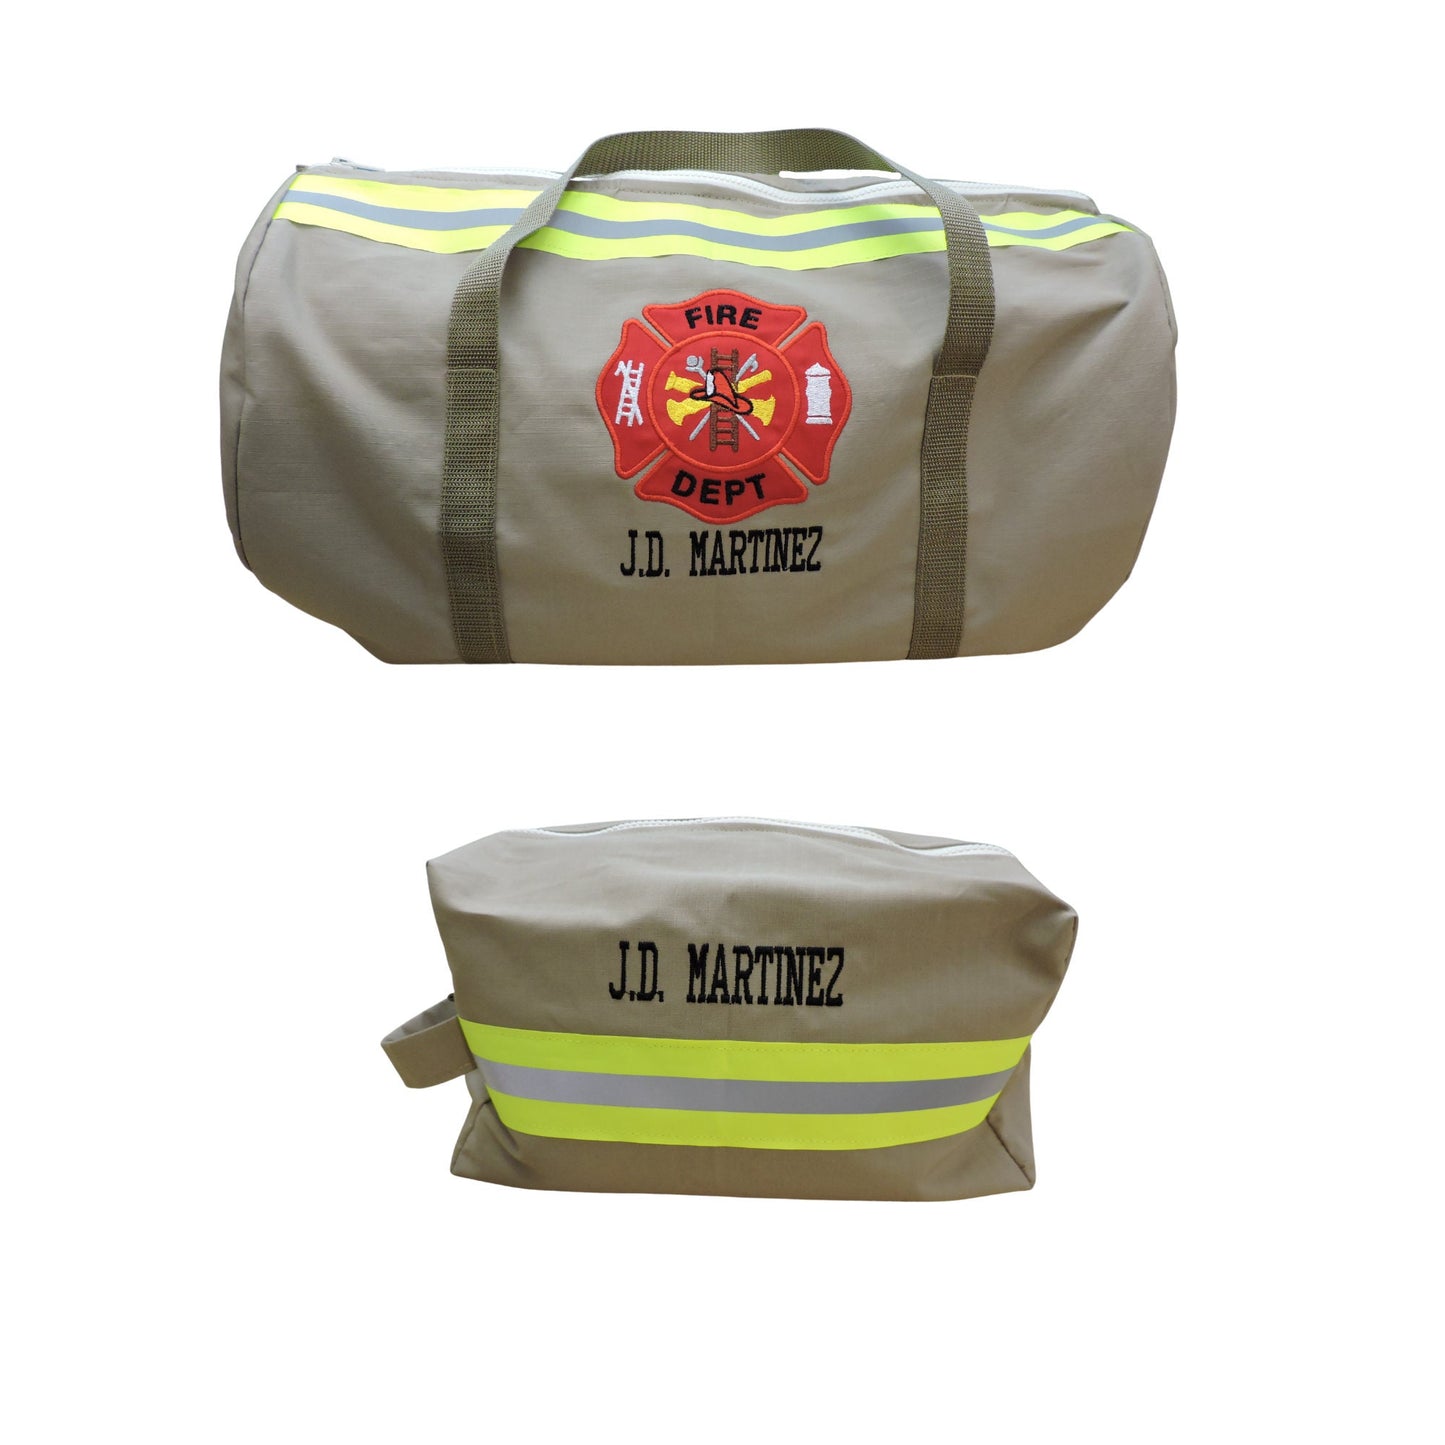 tan fabric firefighter duffel bag and travel bag set